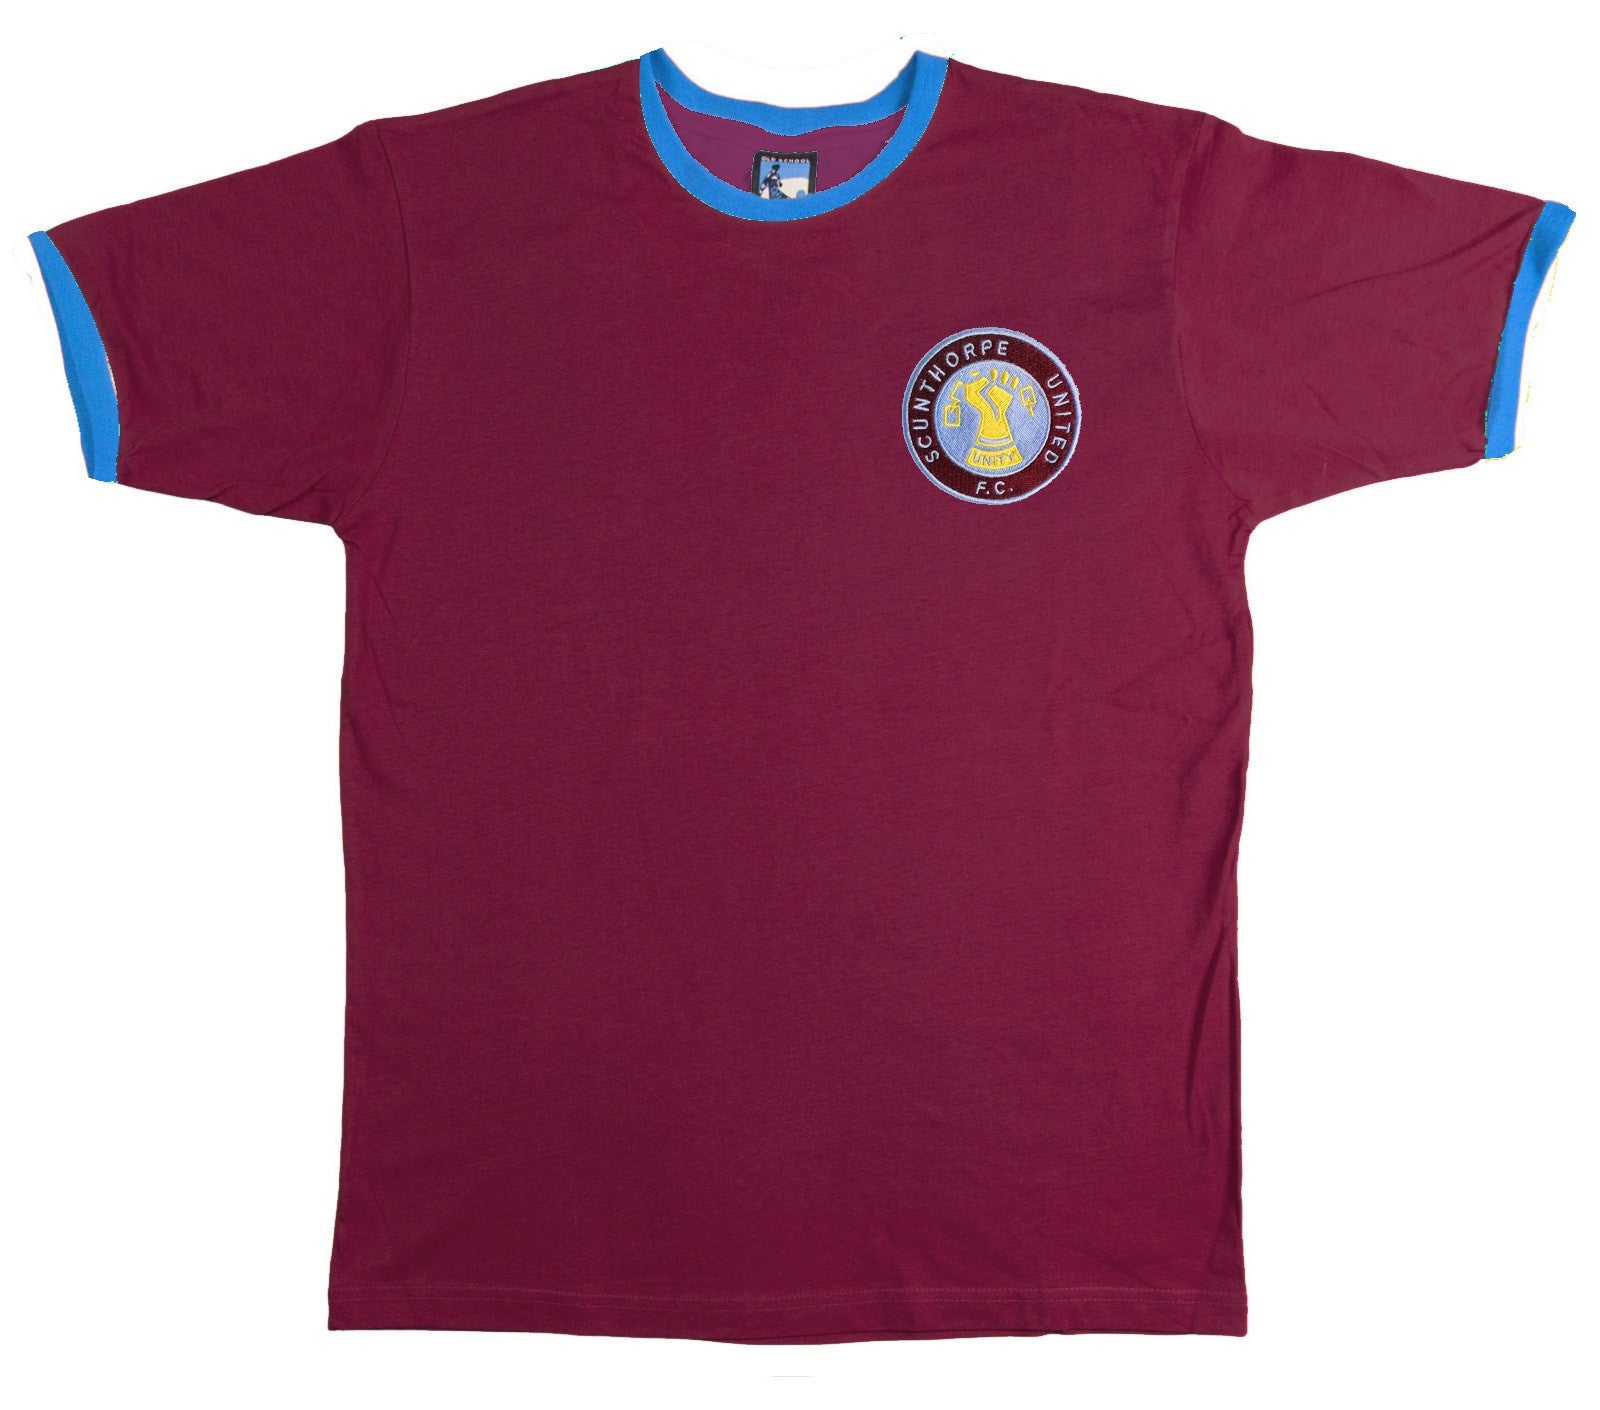 Scunthorpe United Retro Football T Shirt 1980s - Old School Football